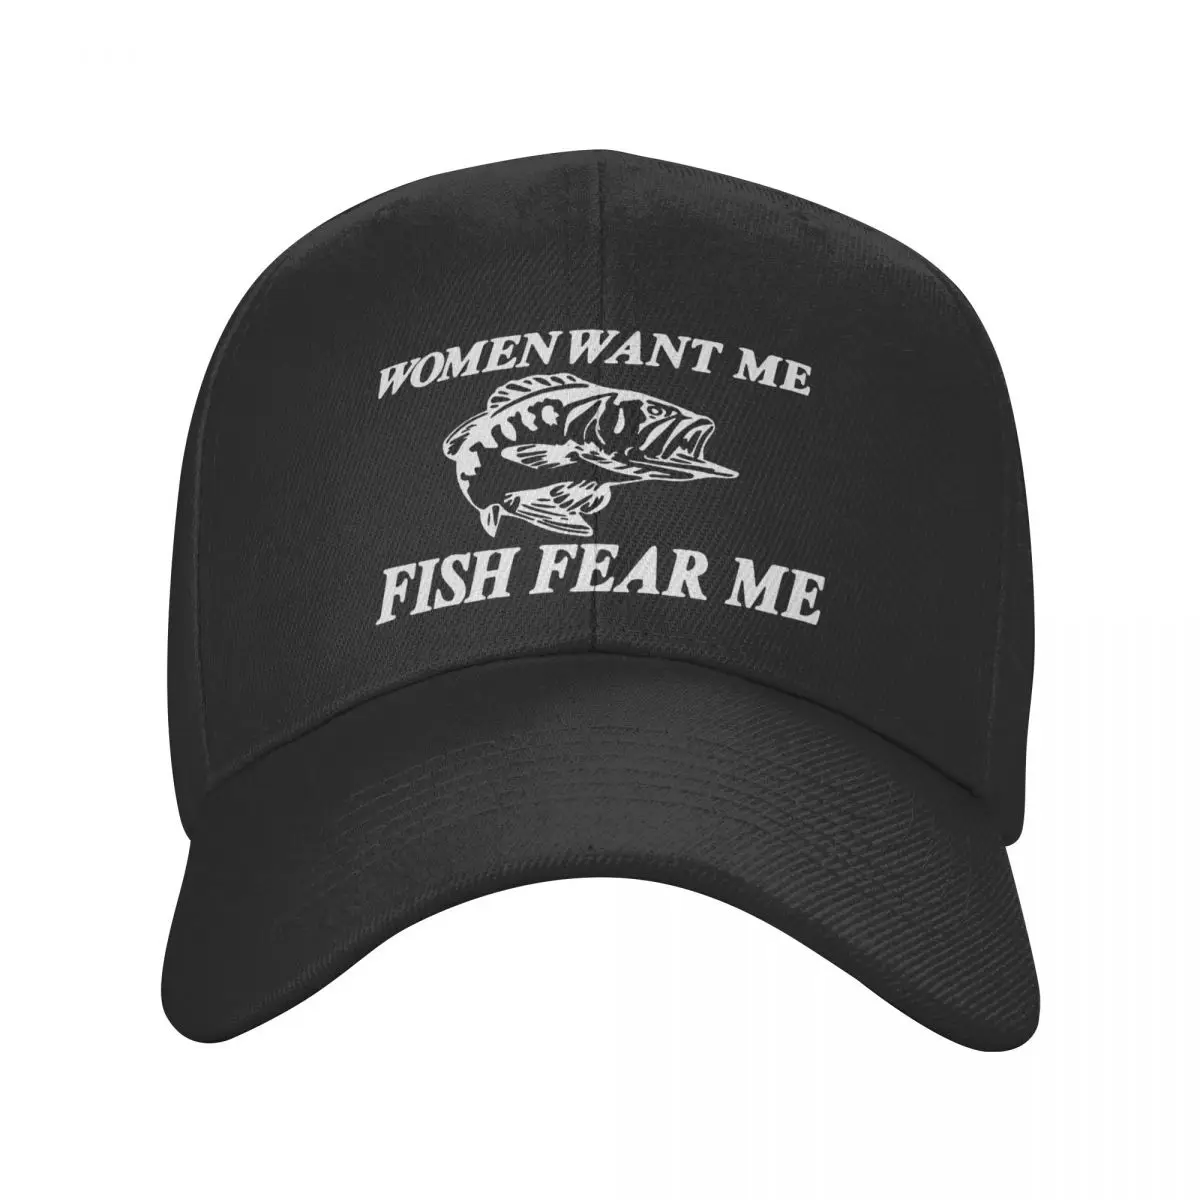 Classic Women Want Me Fish Fear Me Baseball Cap Women Men Adjustable Fishing Fisherman Dad Hat Sun Protection Snapback Caps